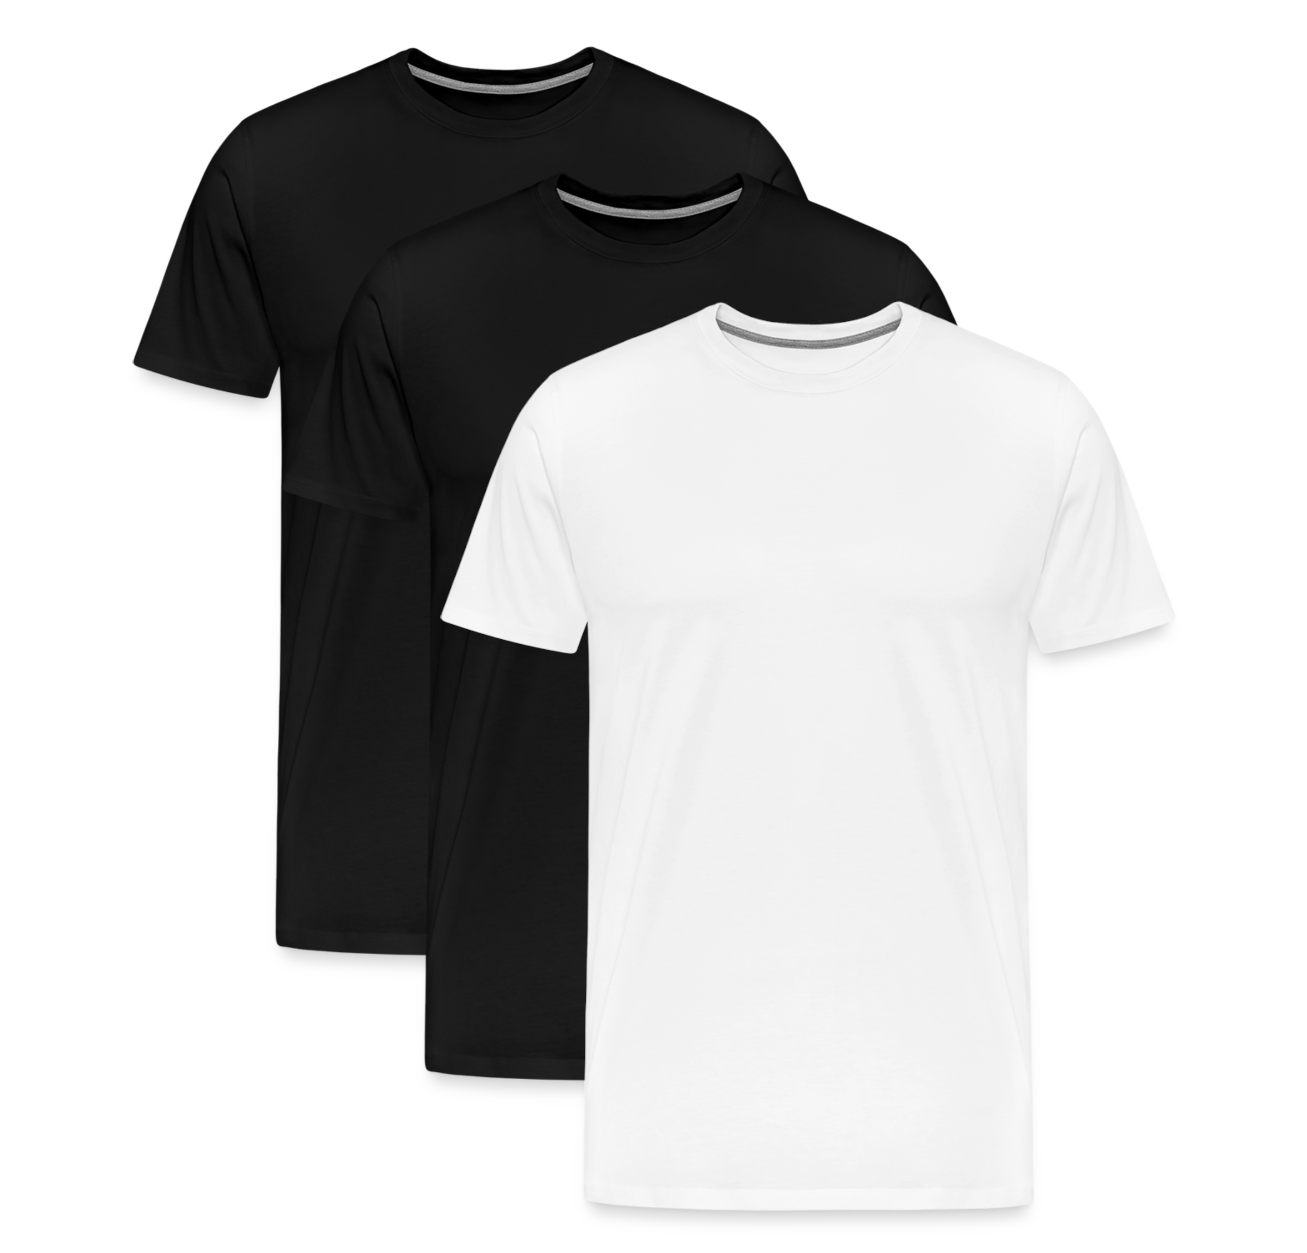 Fluent Tee Variety 3-Pack (Size L) - Men's Premium T-Shirt from fluentclothing.com